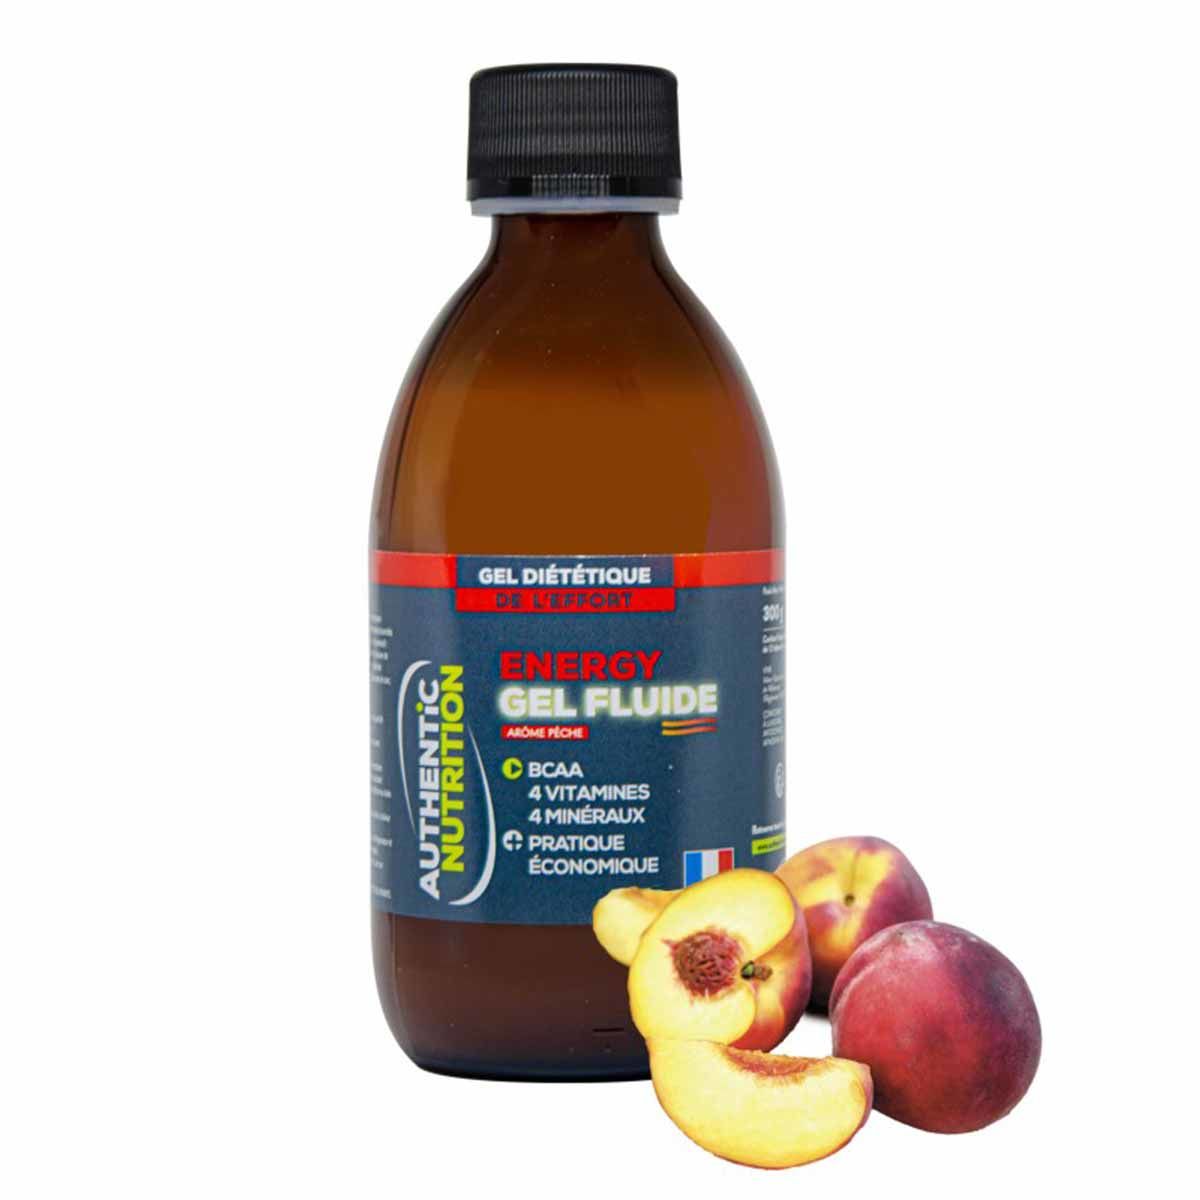 Authentic Nutrition energy gel - Peach